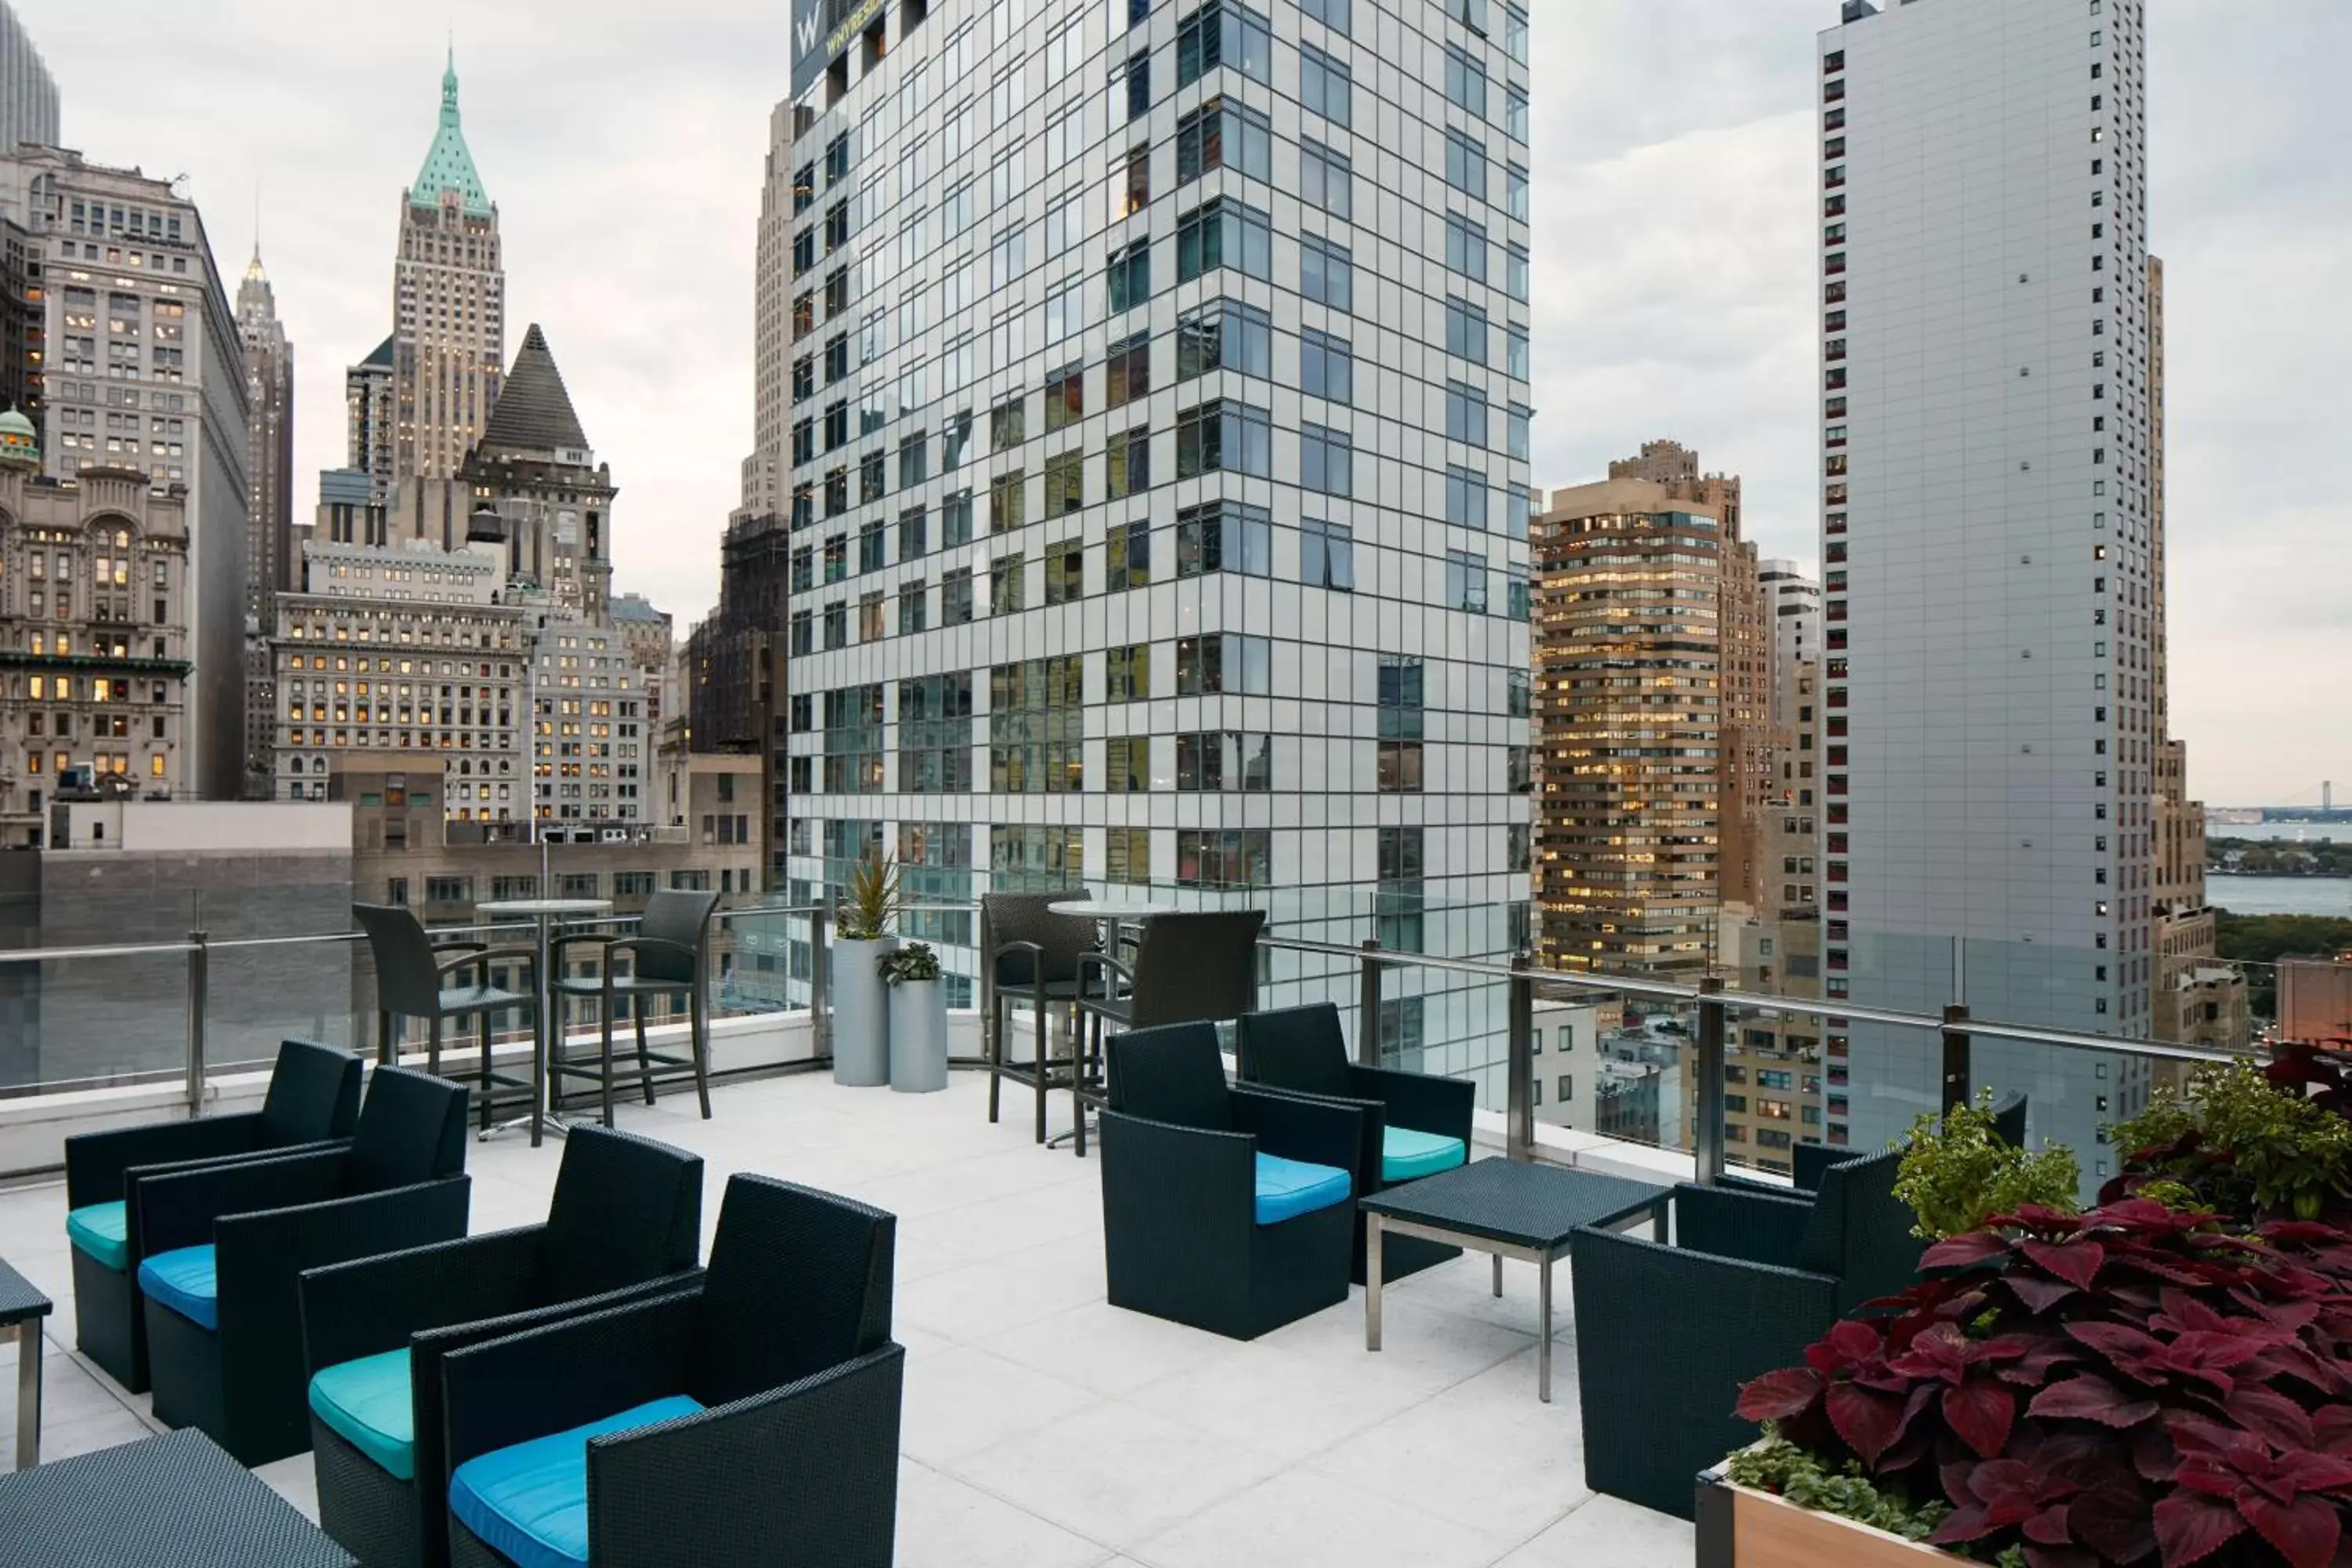 Balcony/Terrace in Club Quarters Hotel World Trade Center, New York